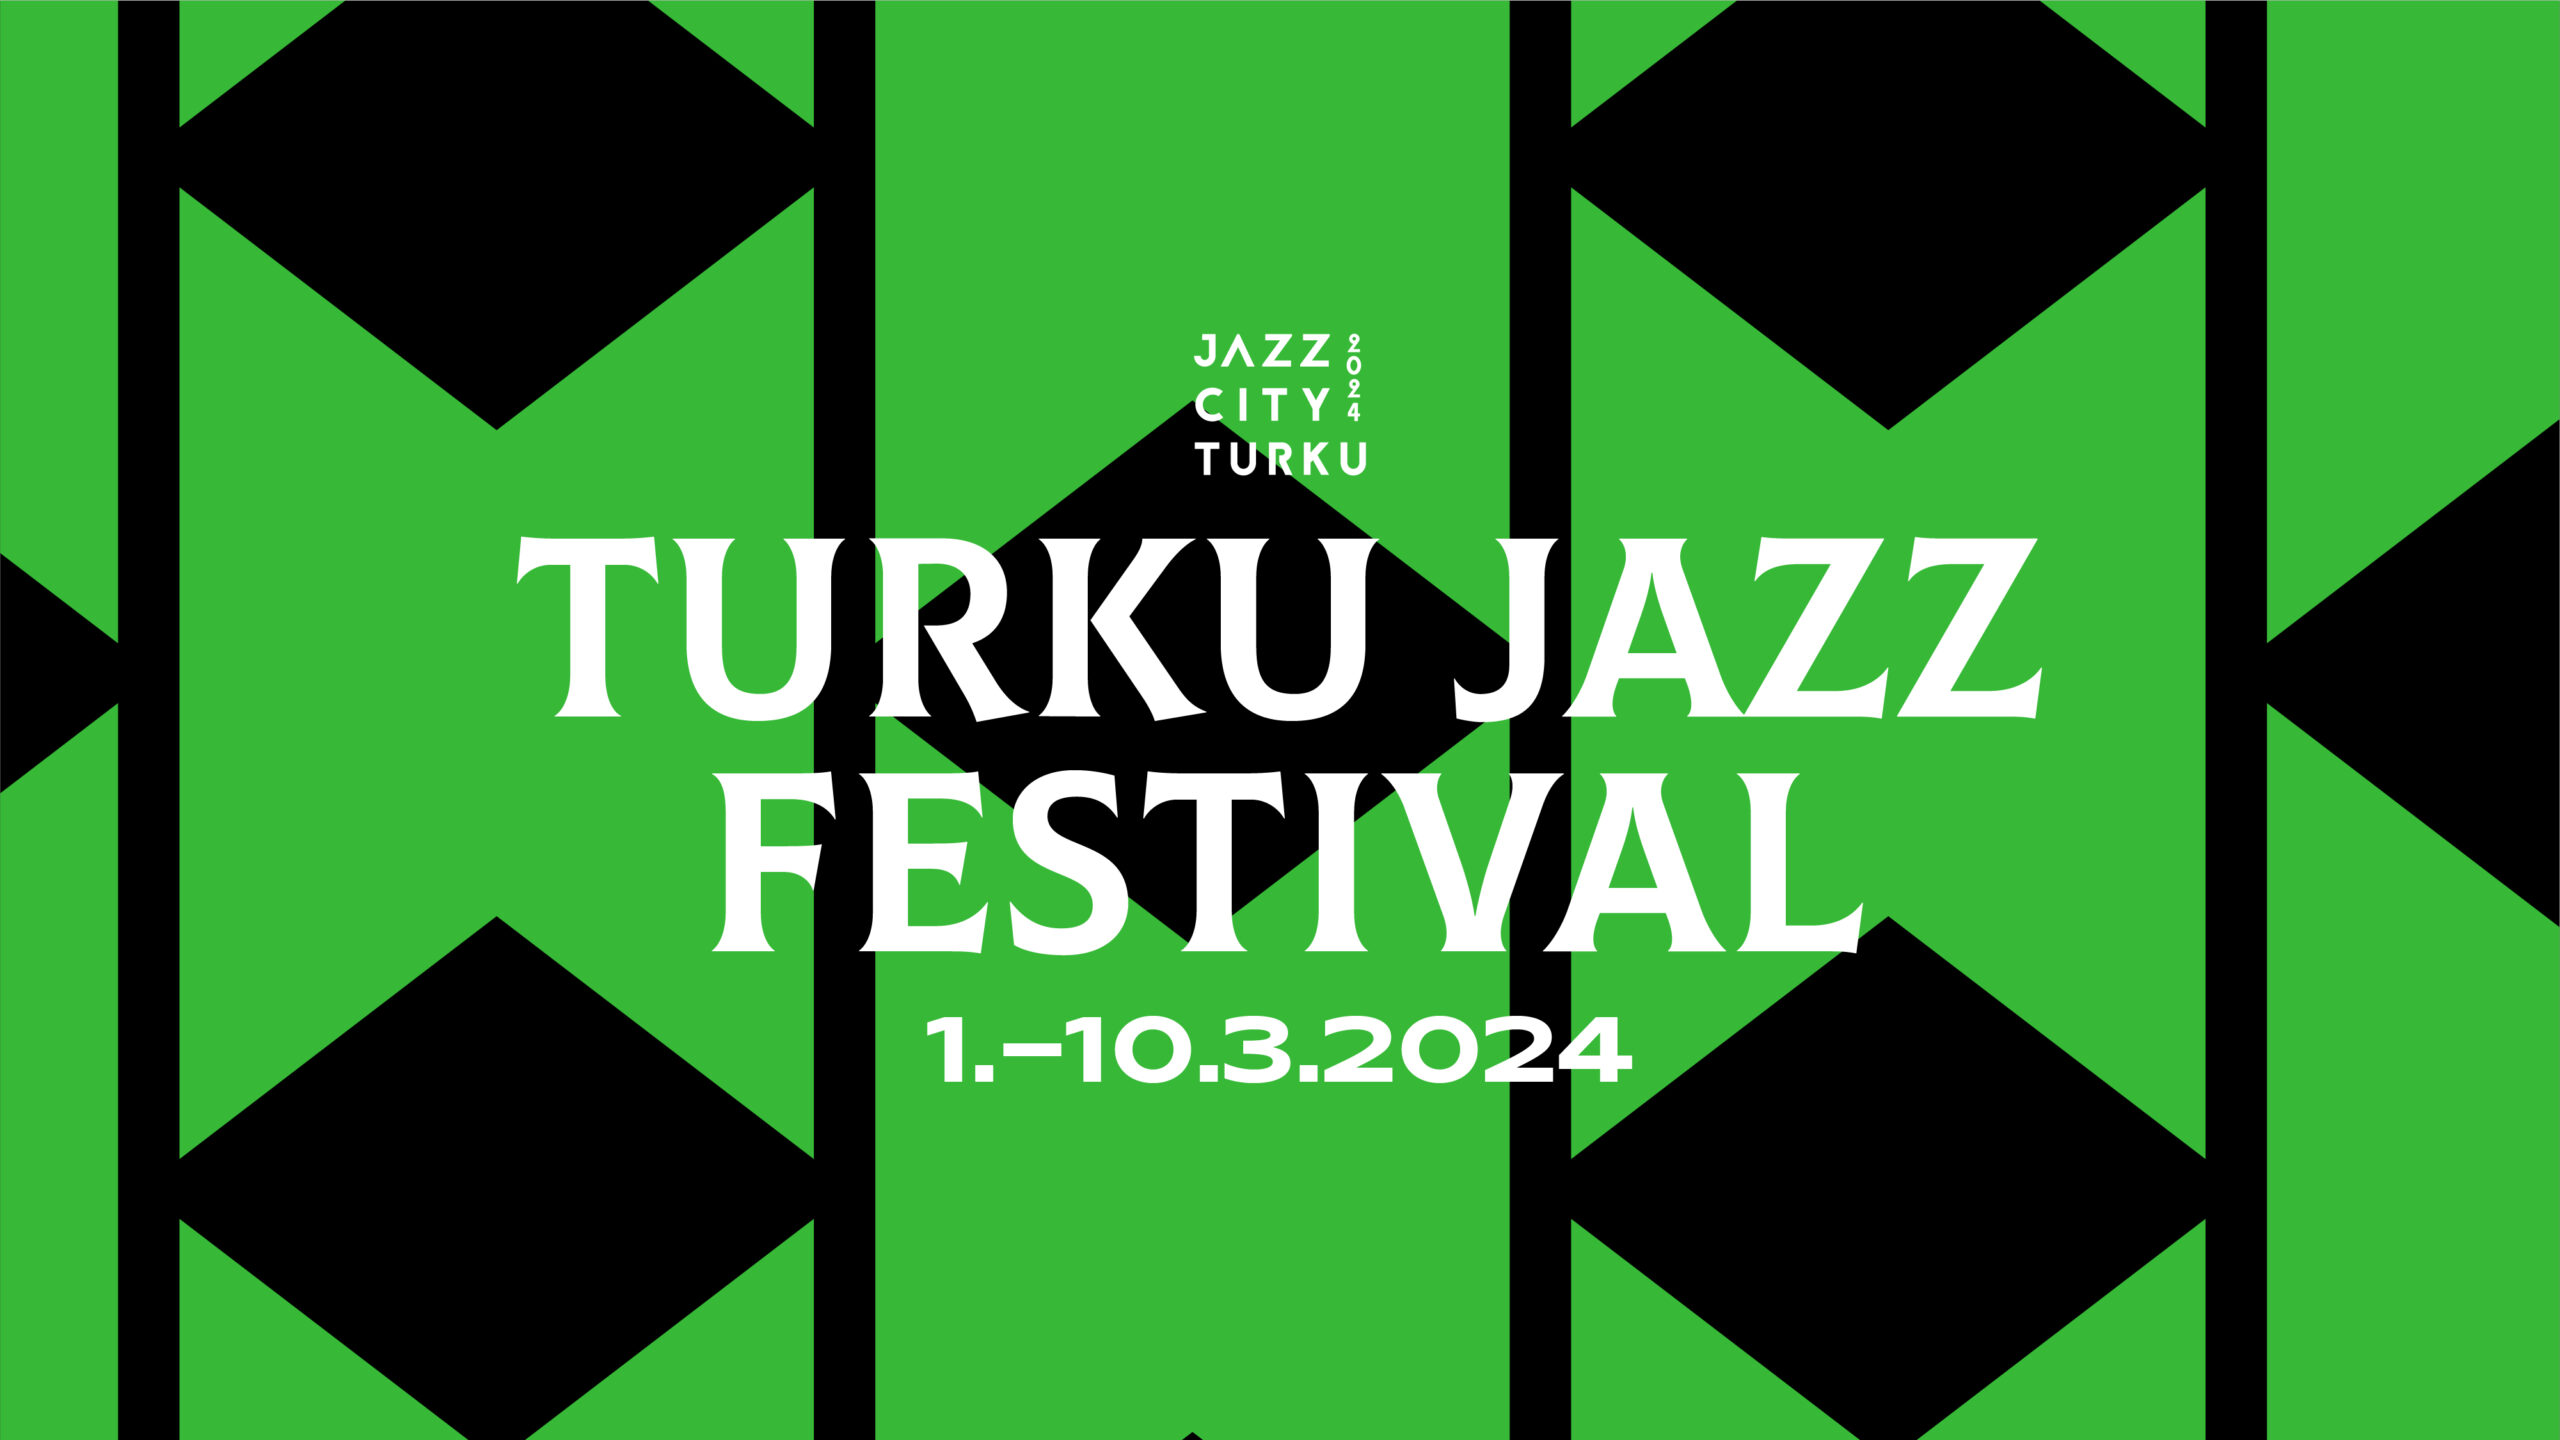 Turku Jazz Festival